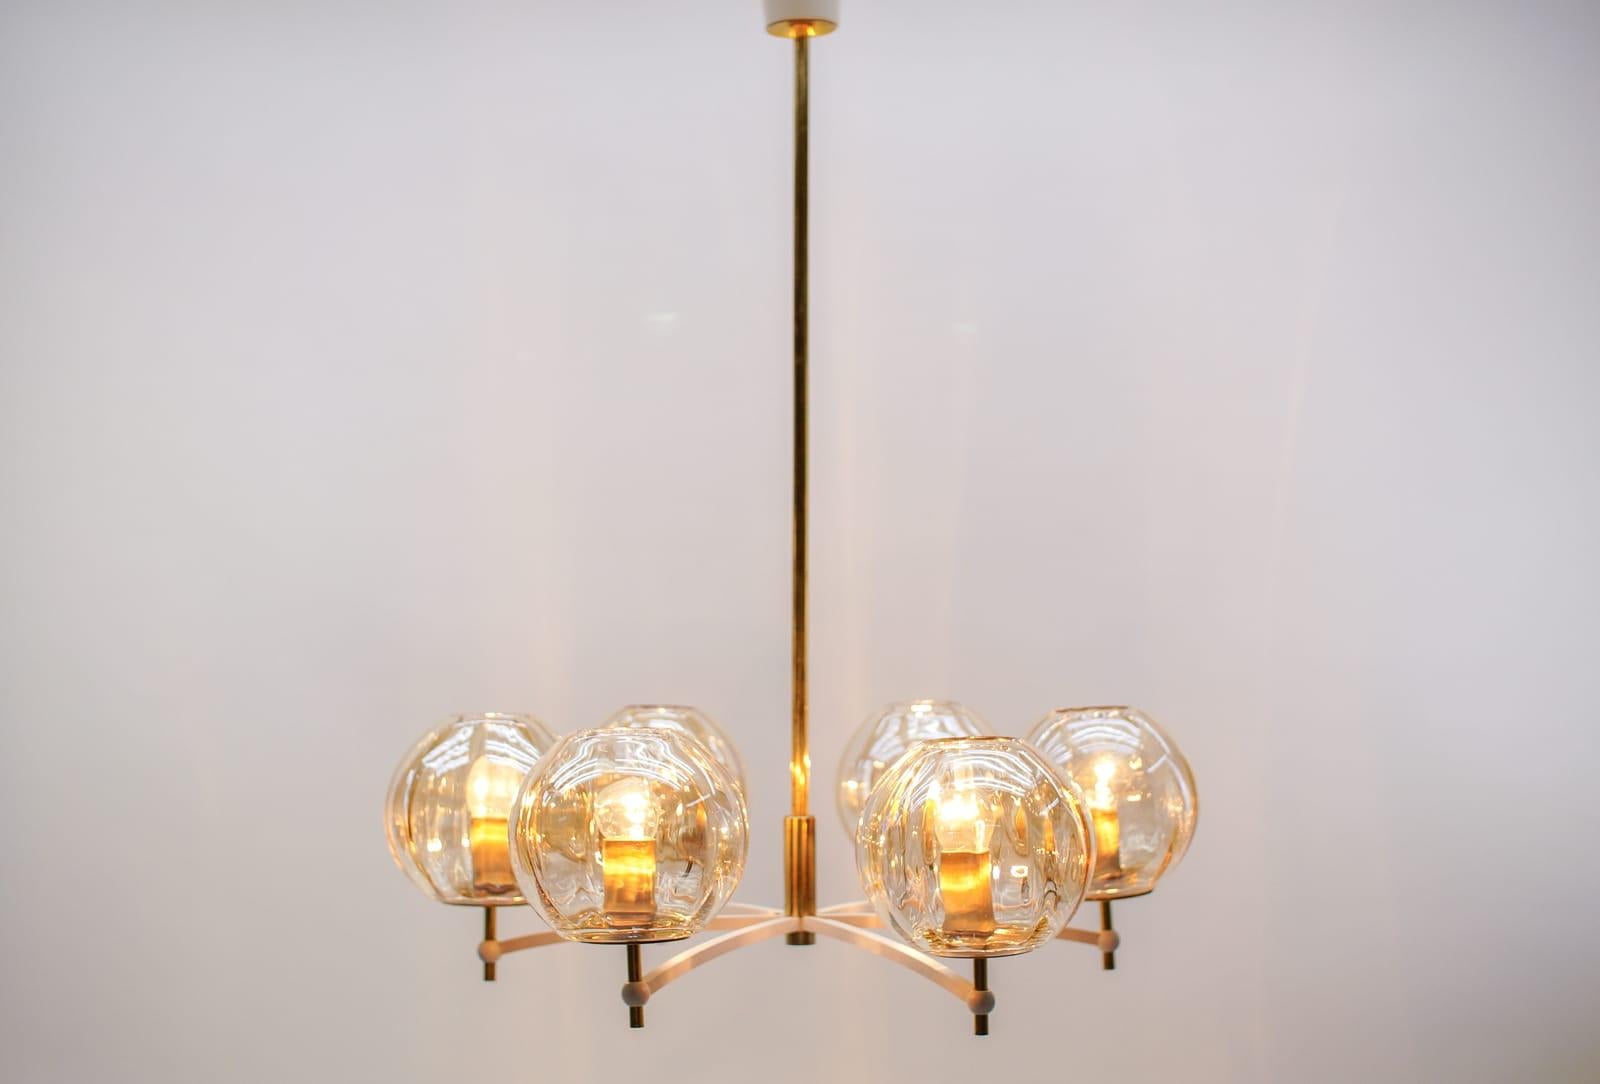 Scandinavian Elegant Mid-Century Modern Orbit Ceiling Lamp in Amber Glass and Brass, 1960s For Sale